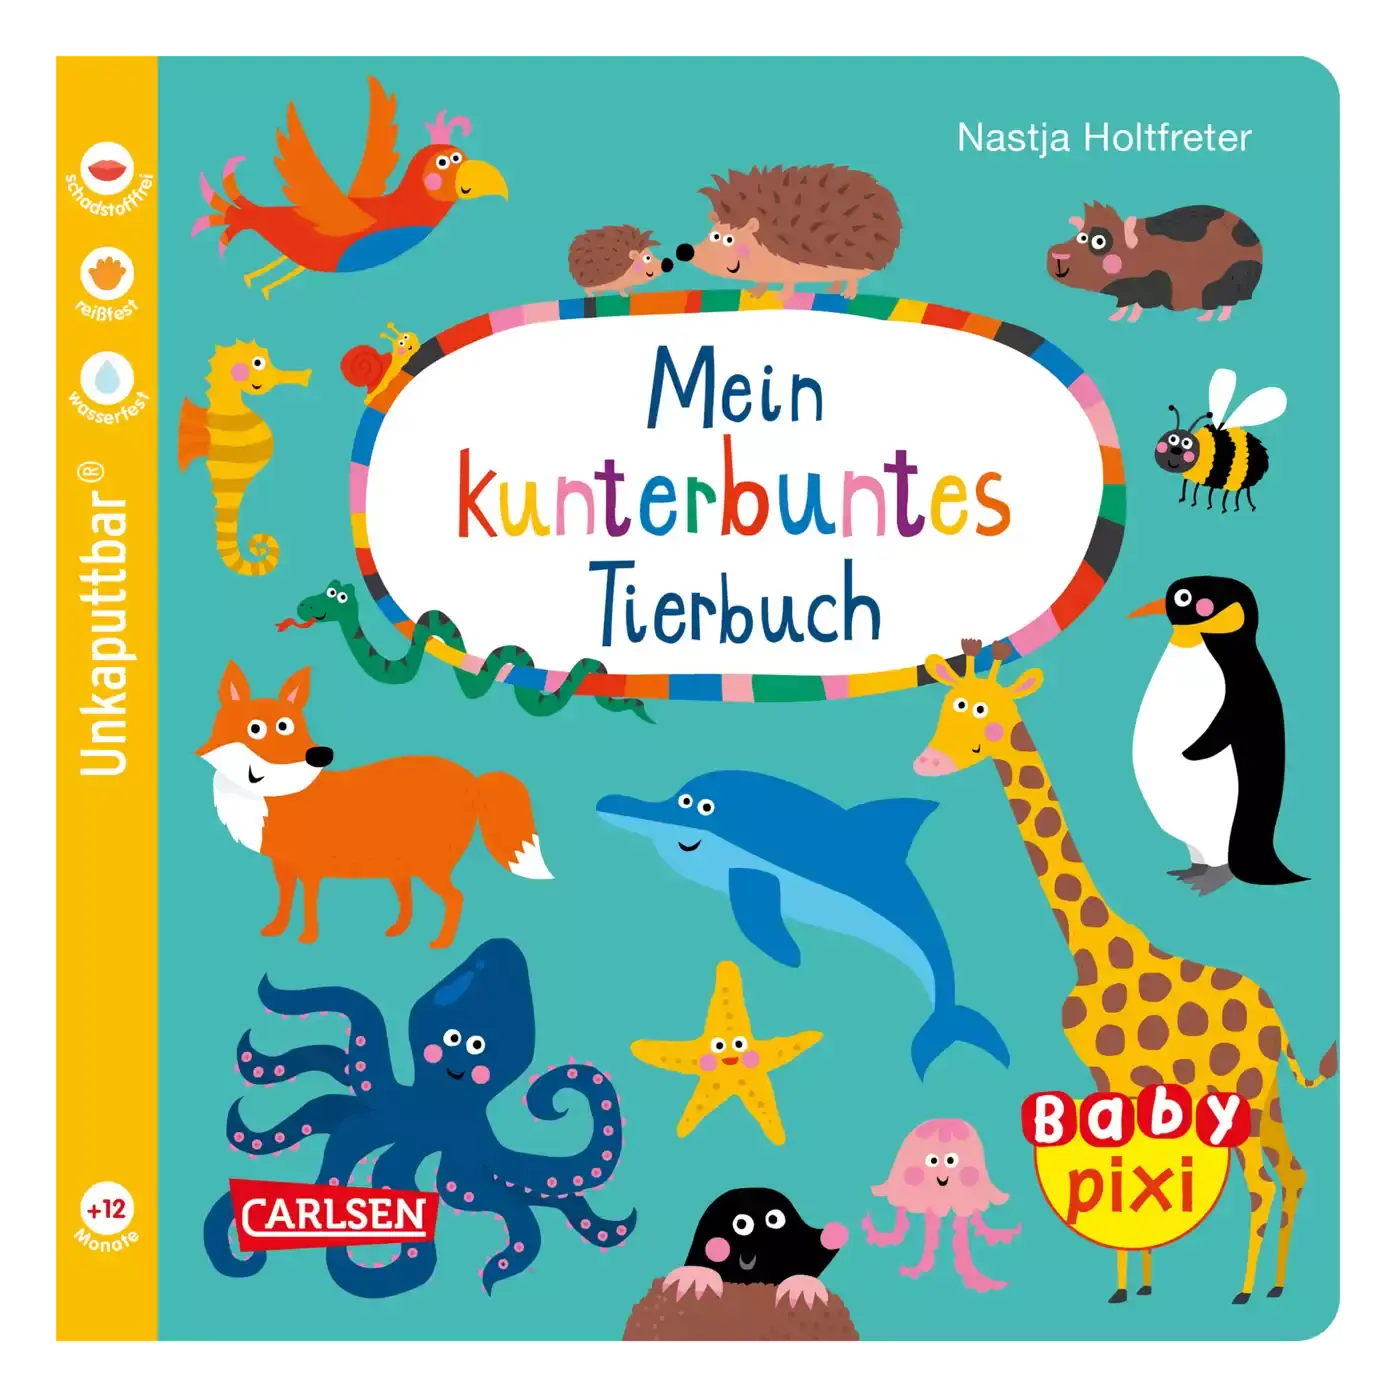 Baby Pixi - Mein kunterbuntes Tierbuch CARLSEN 2000574201955 3